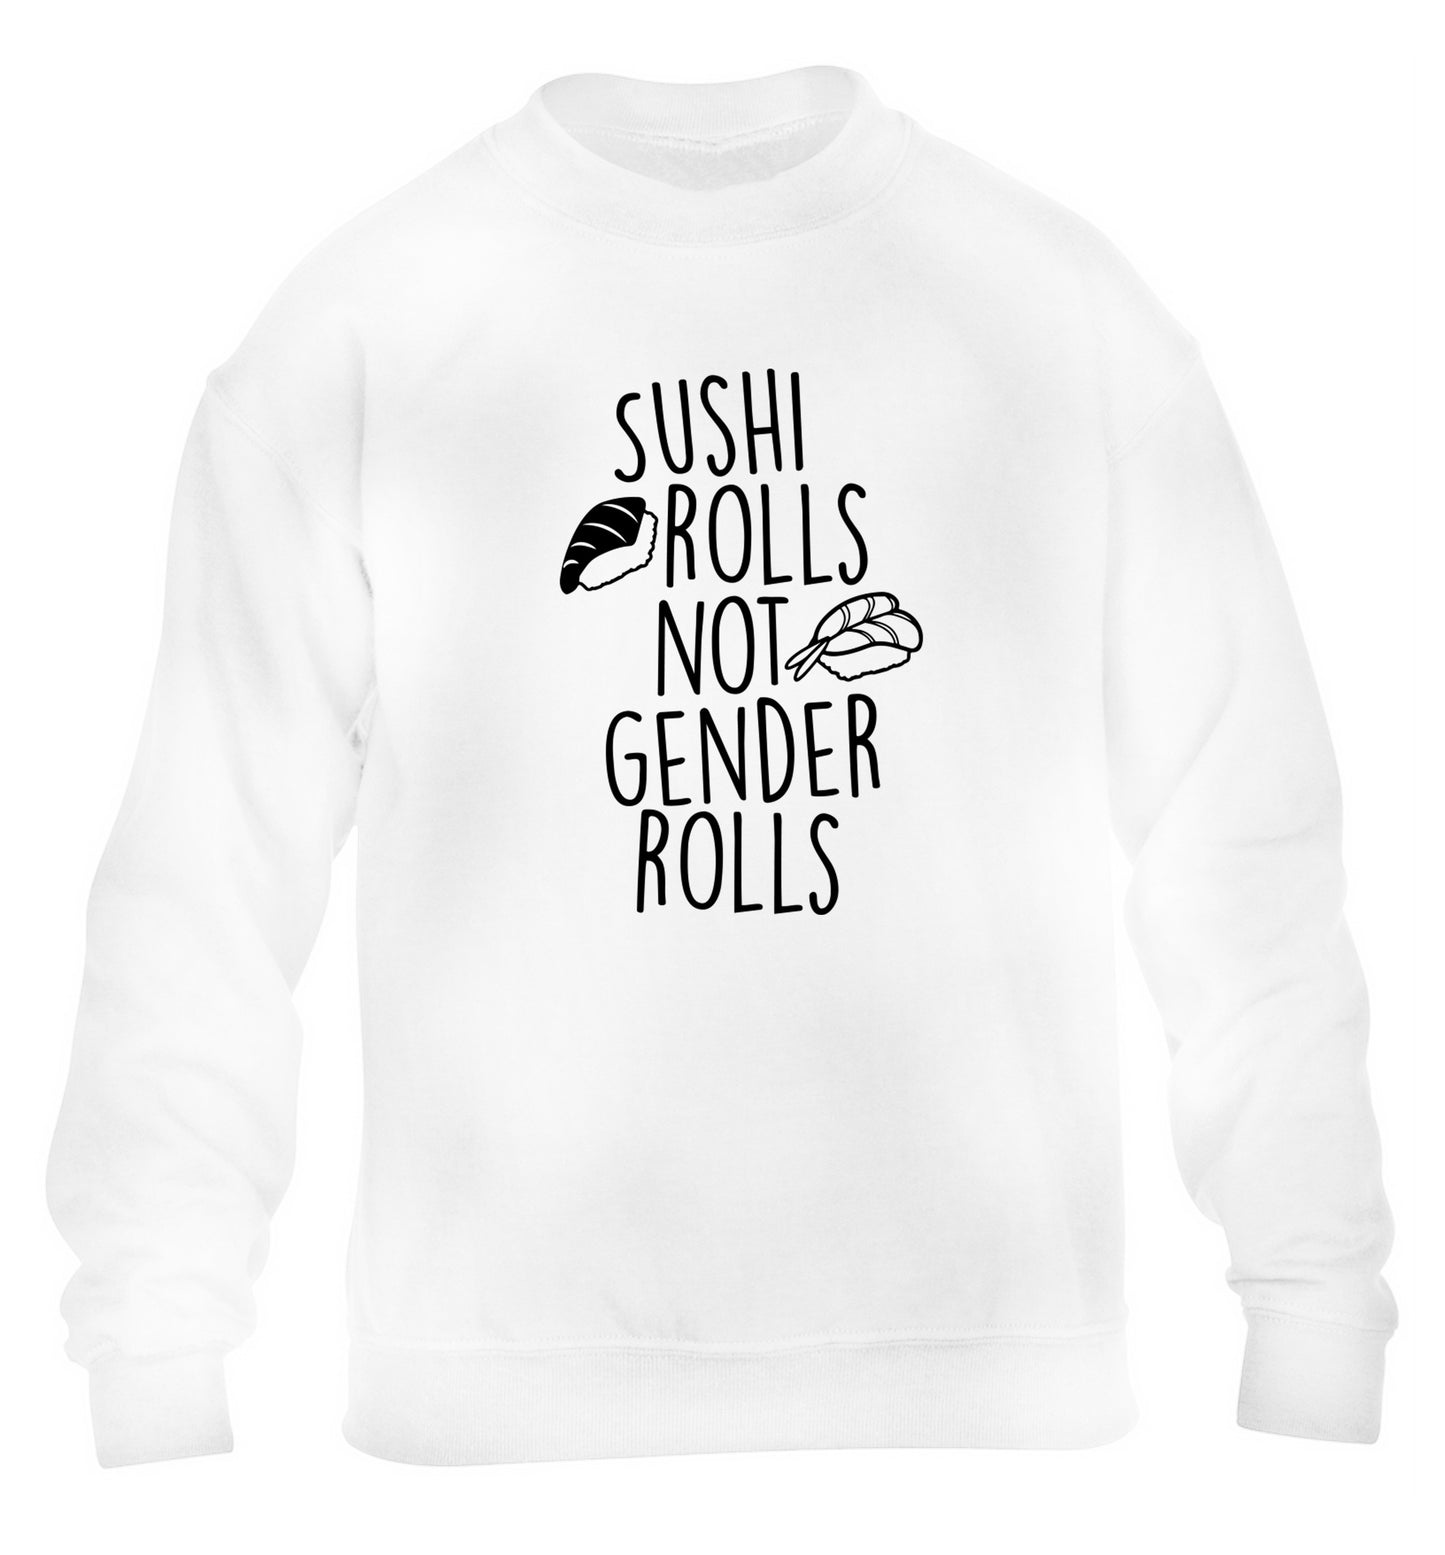 Sushi rolls not gender rolls children's white sweater 12-14 Years